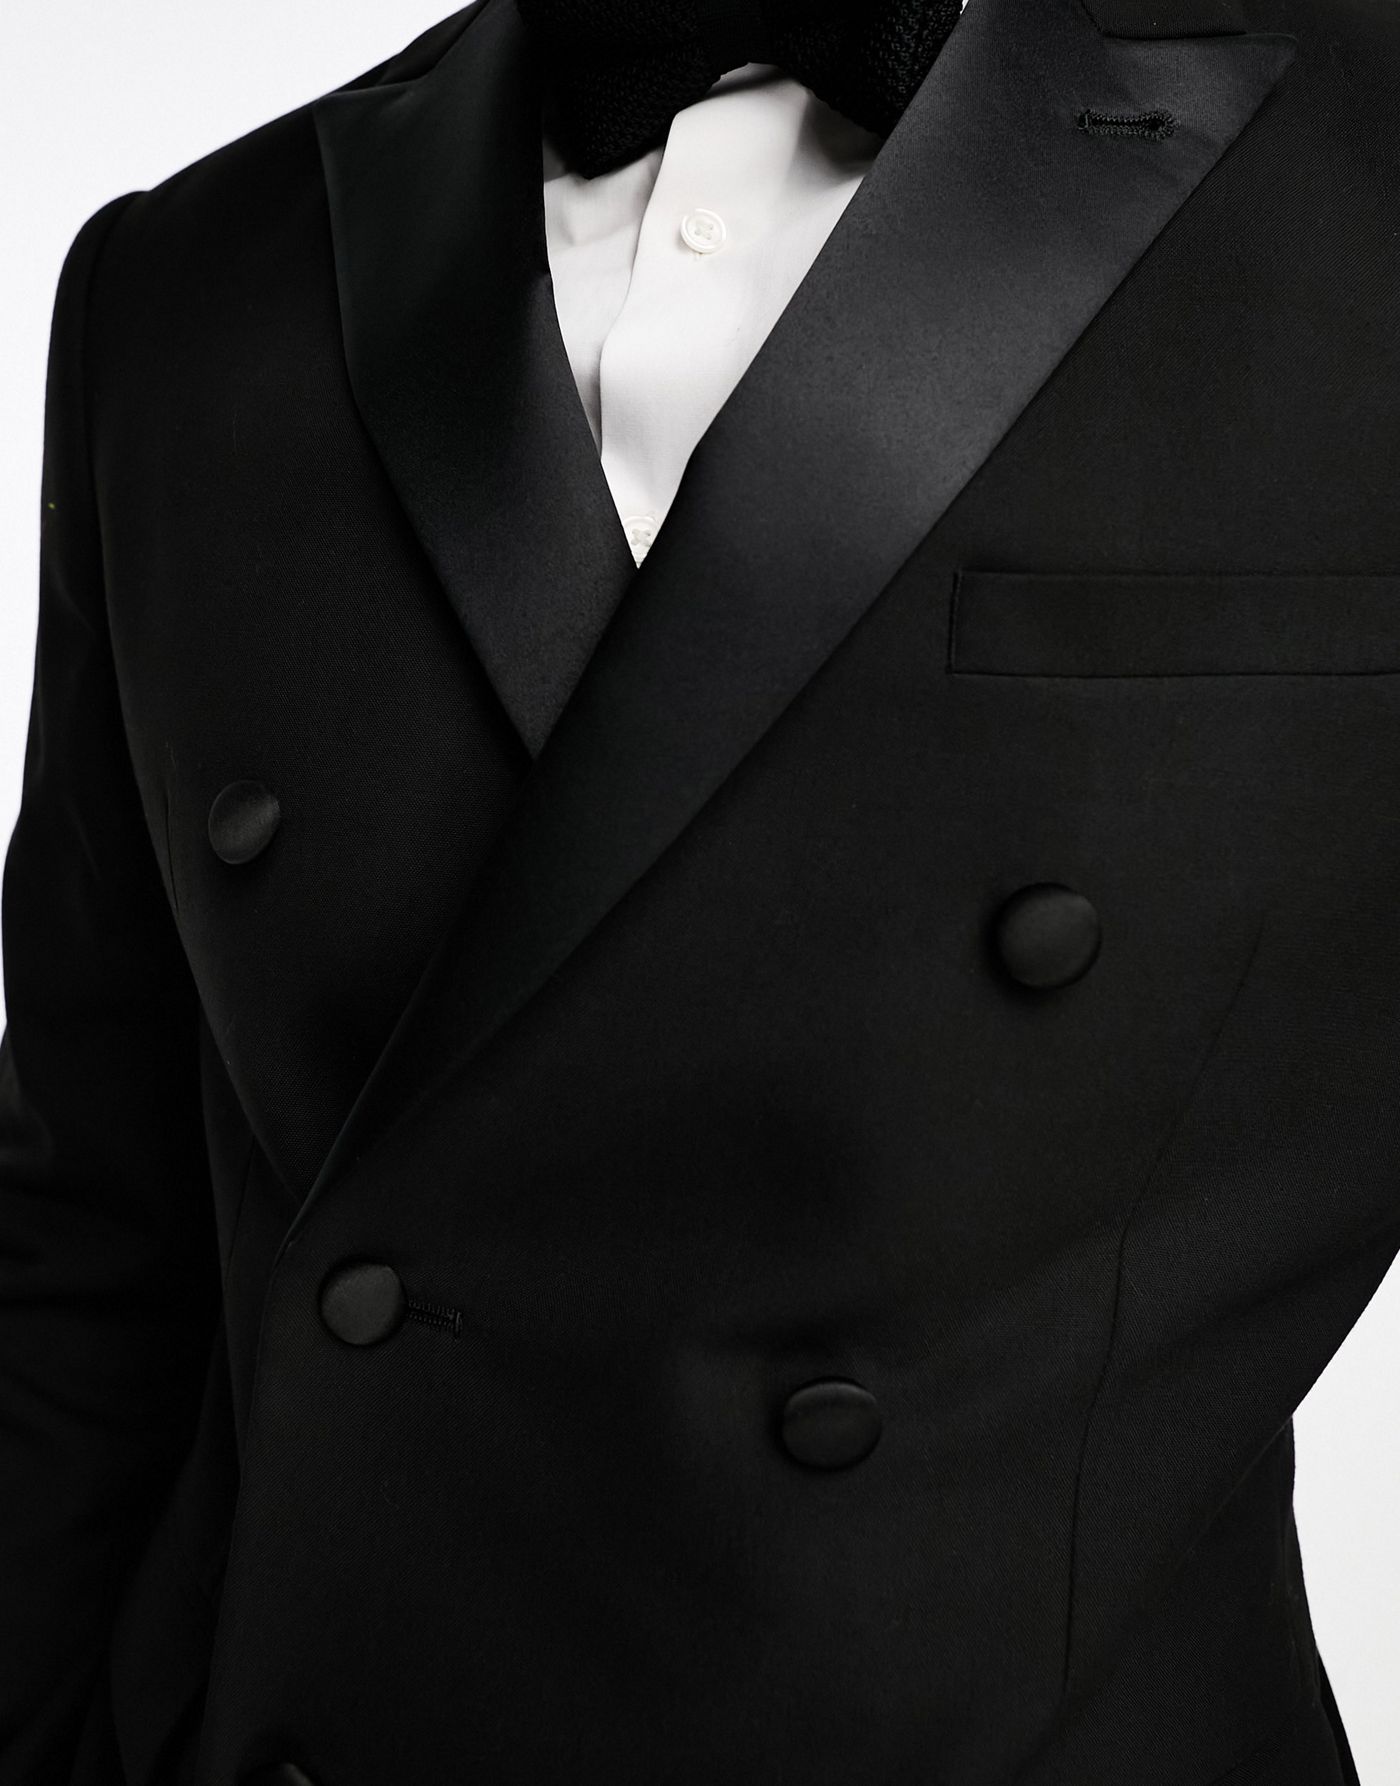 ASOS DESIGN slim double breasted tuxedo suit jacket in black